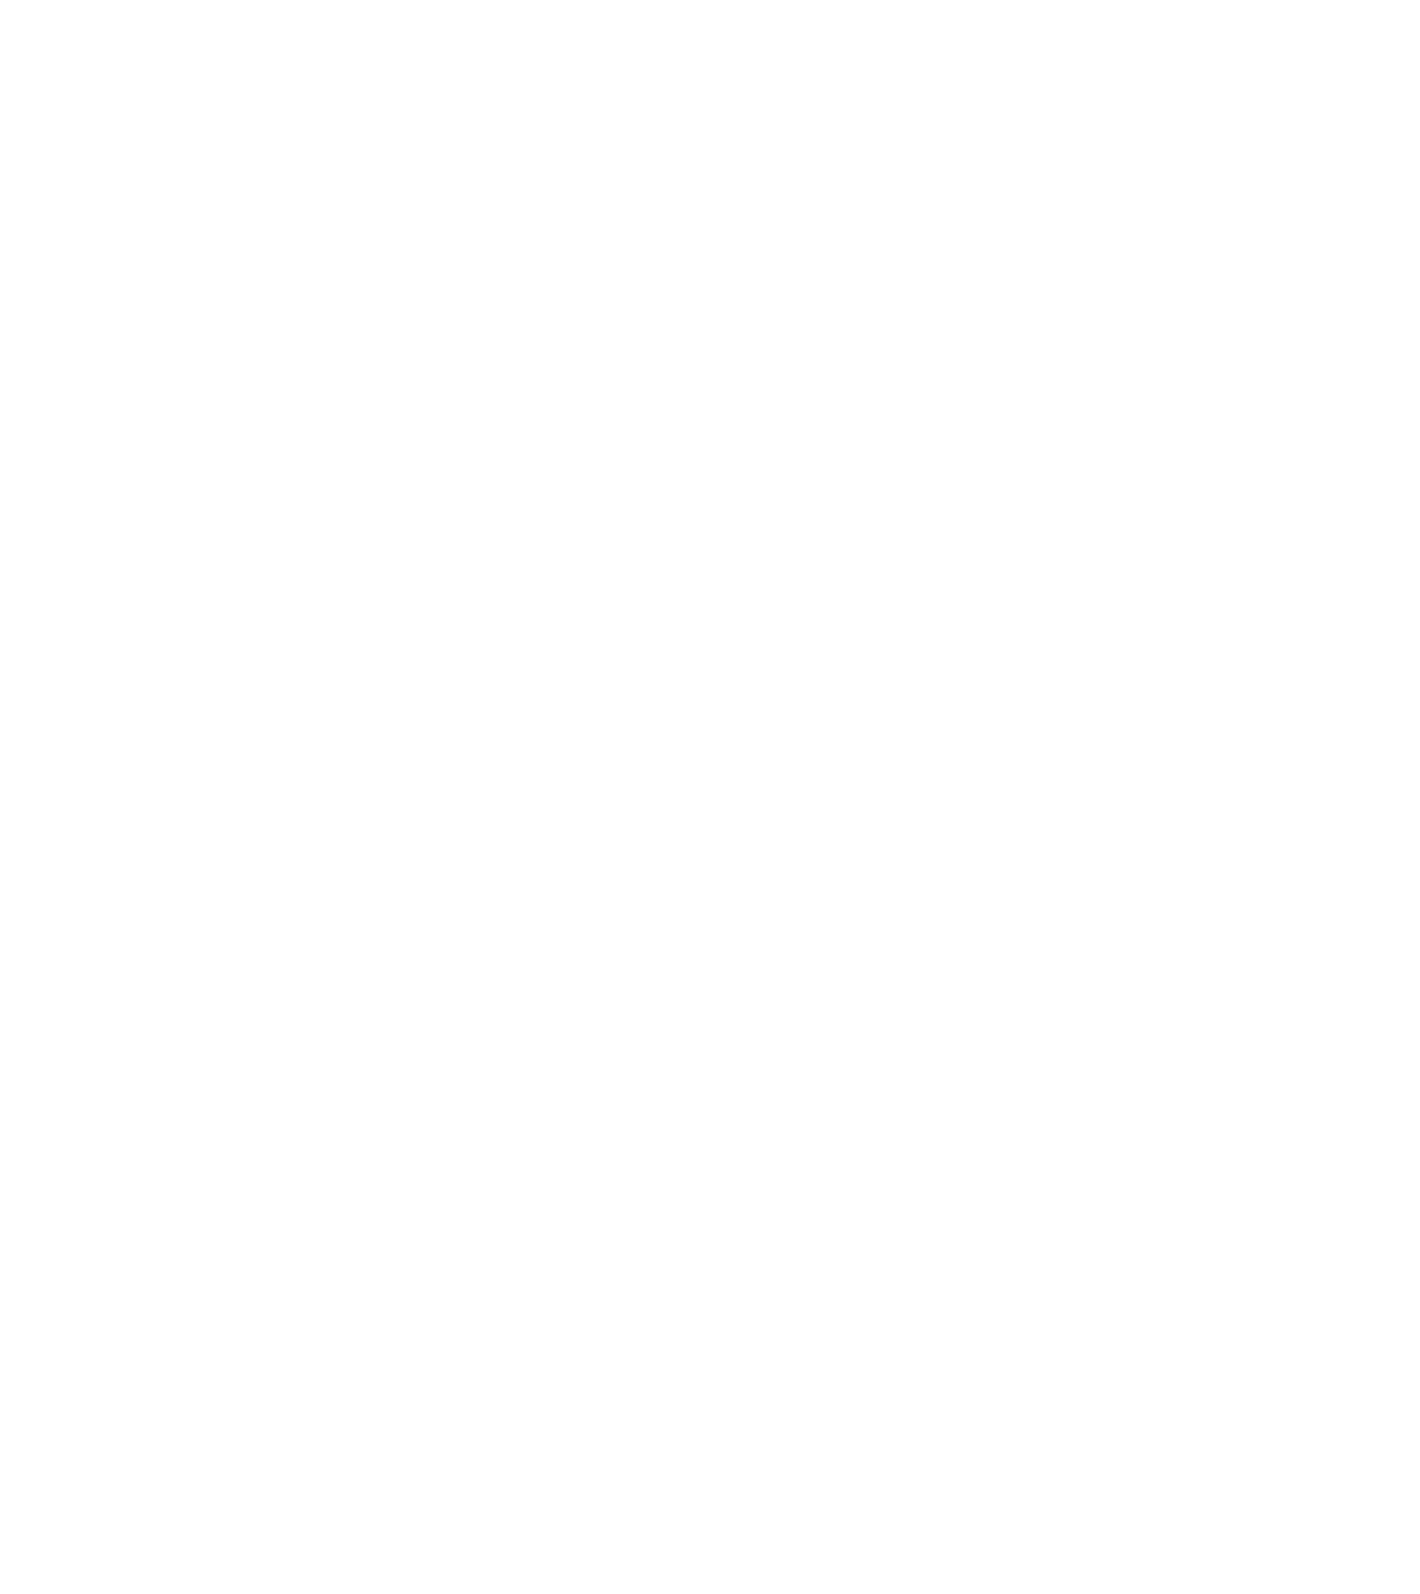 Sri Trang Gloves logo pour fonds sombres (PNG transparent)